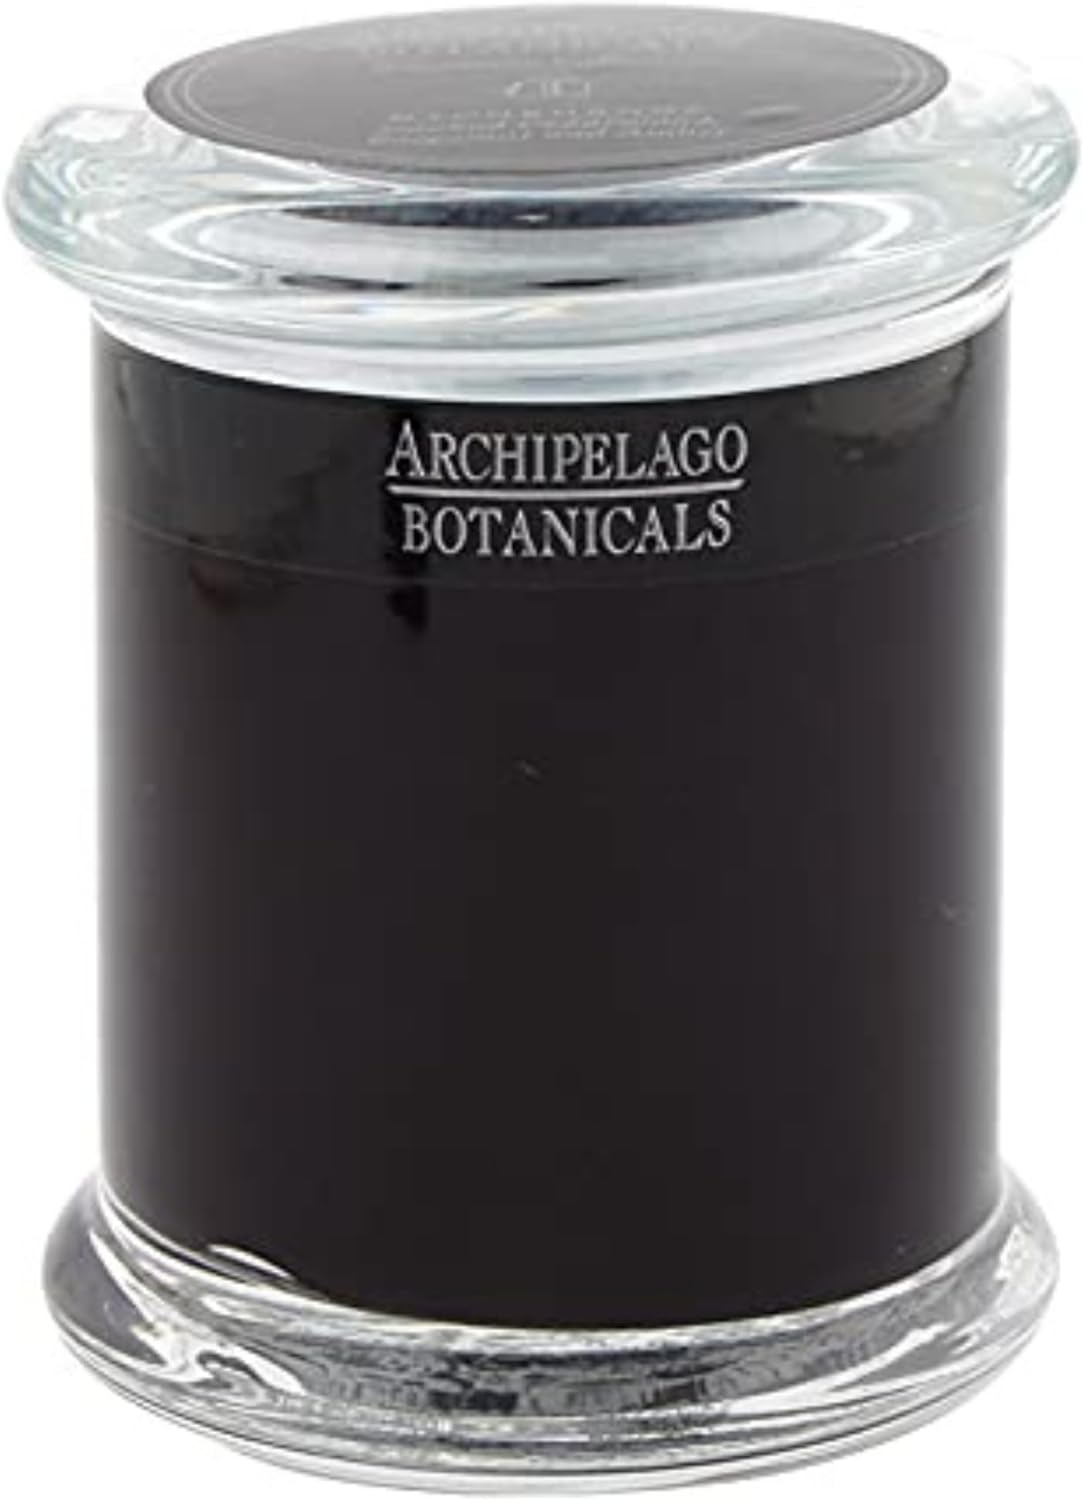 Archipelago Botanicals Stonehenge Glass Jar Candle, Cedarwood, Citrus Bergamot and Amber Scent, Lead-Free Candle Wicks, Burns Approx. 60 Hours (8.6 oz)